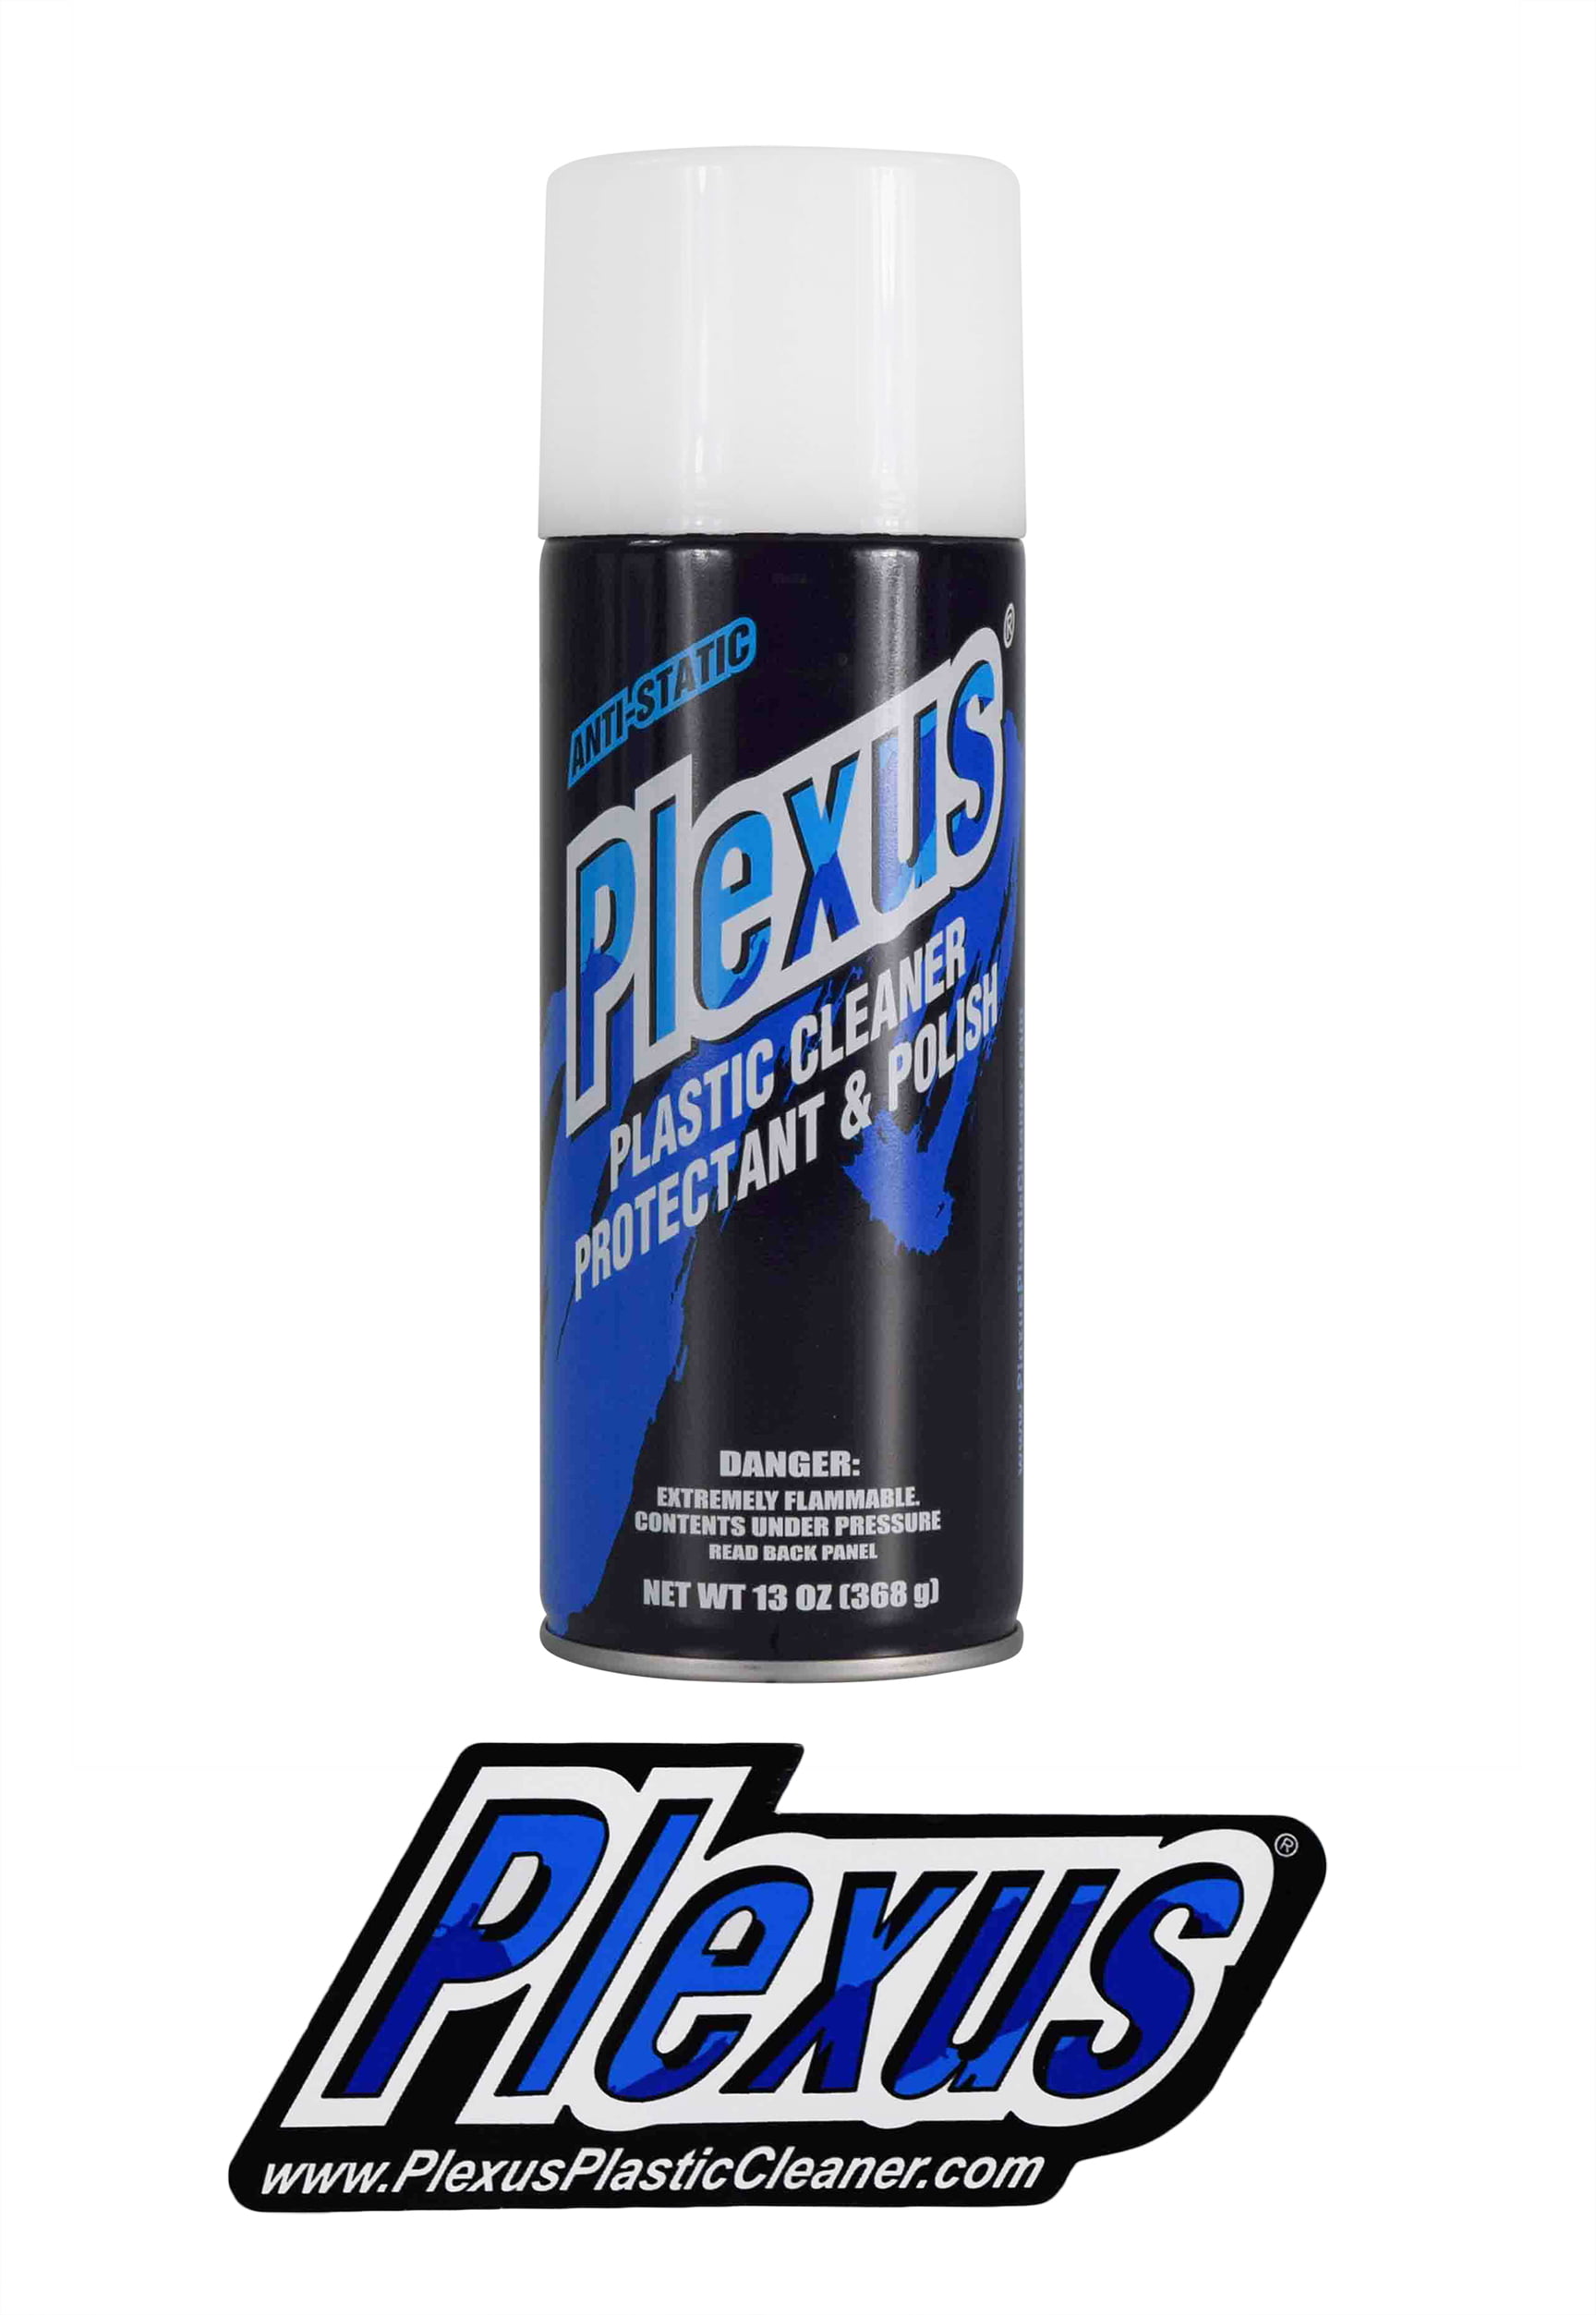 Plexus 20214 Plastic Cleaner Protectant and Polish 13 oz.